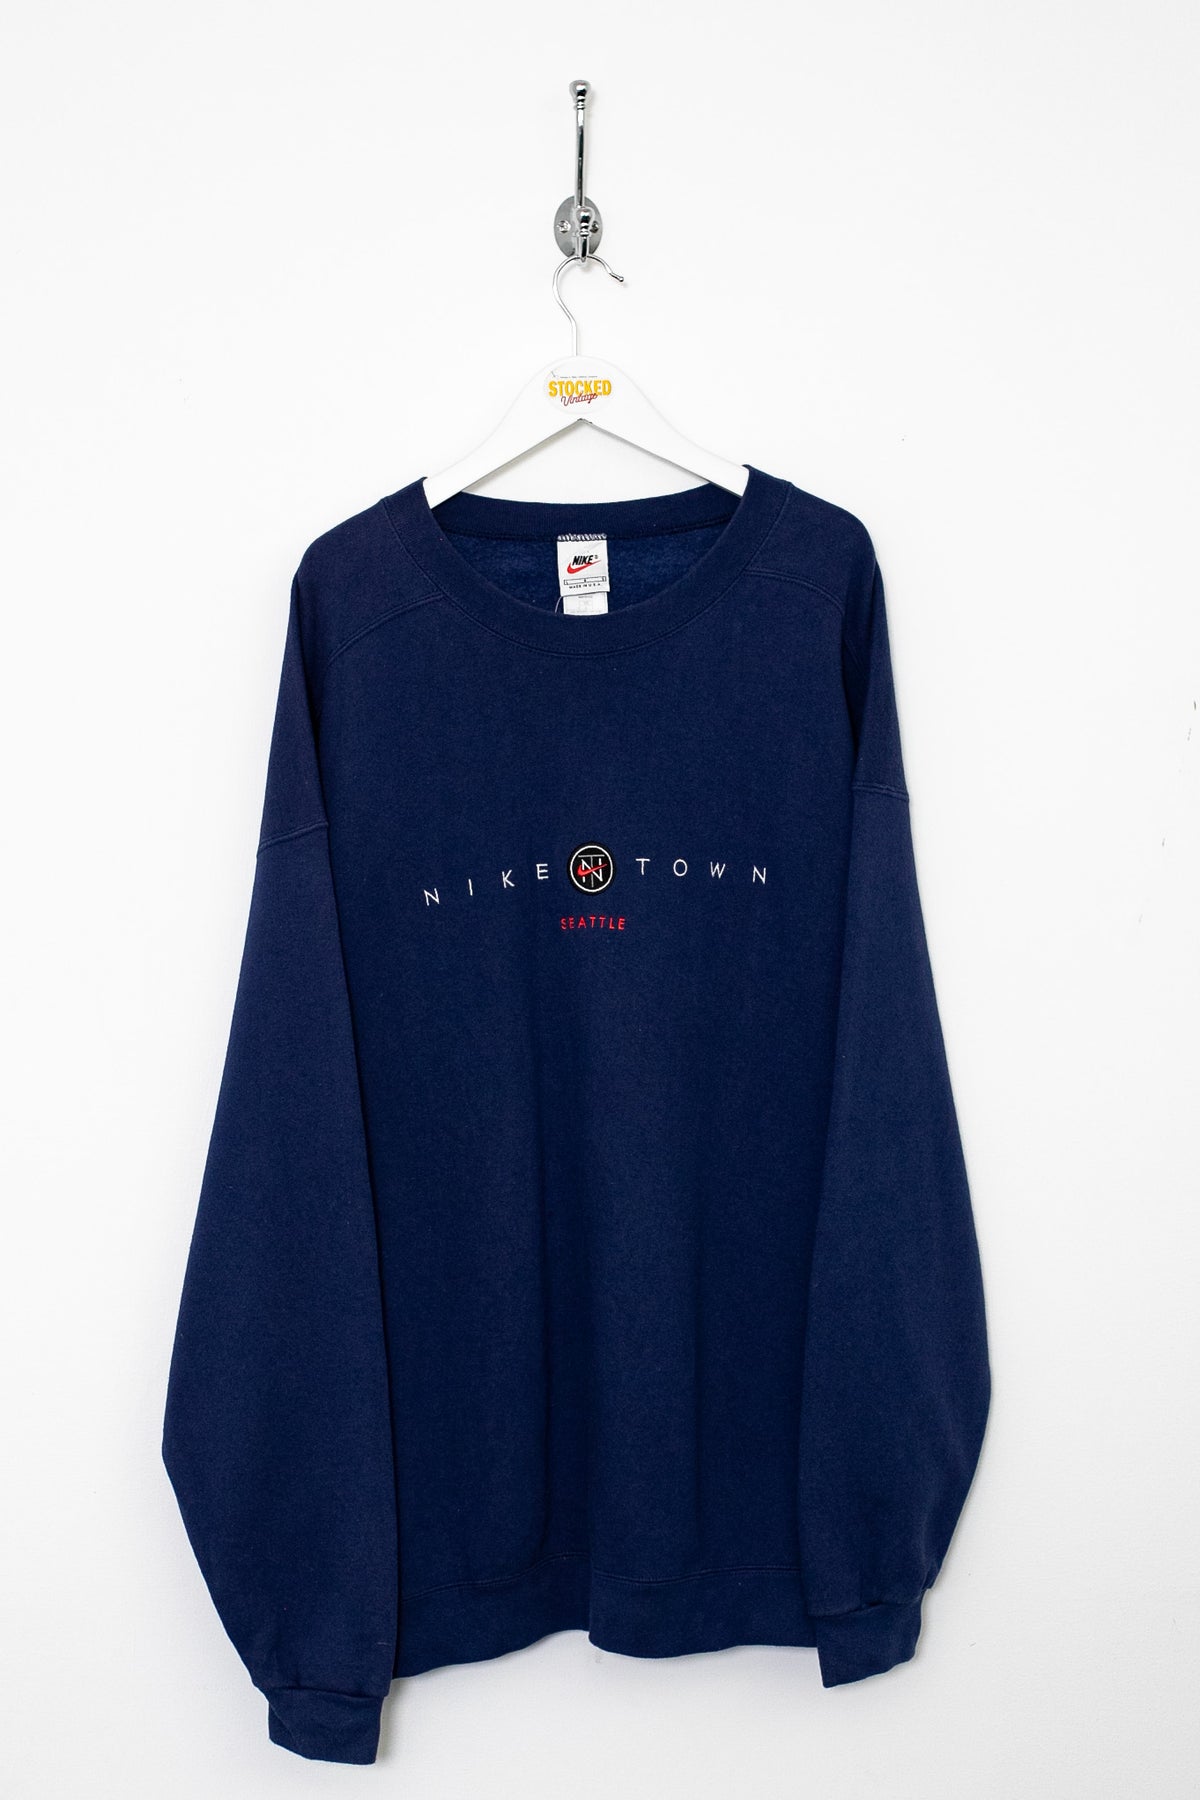 90s Nike Town Sweatshirt (L)